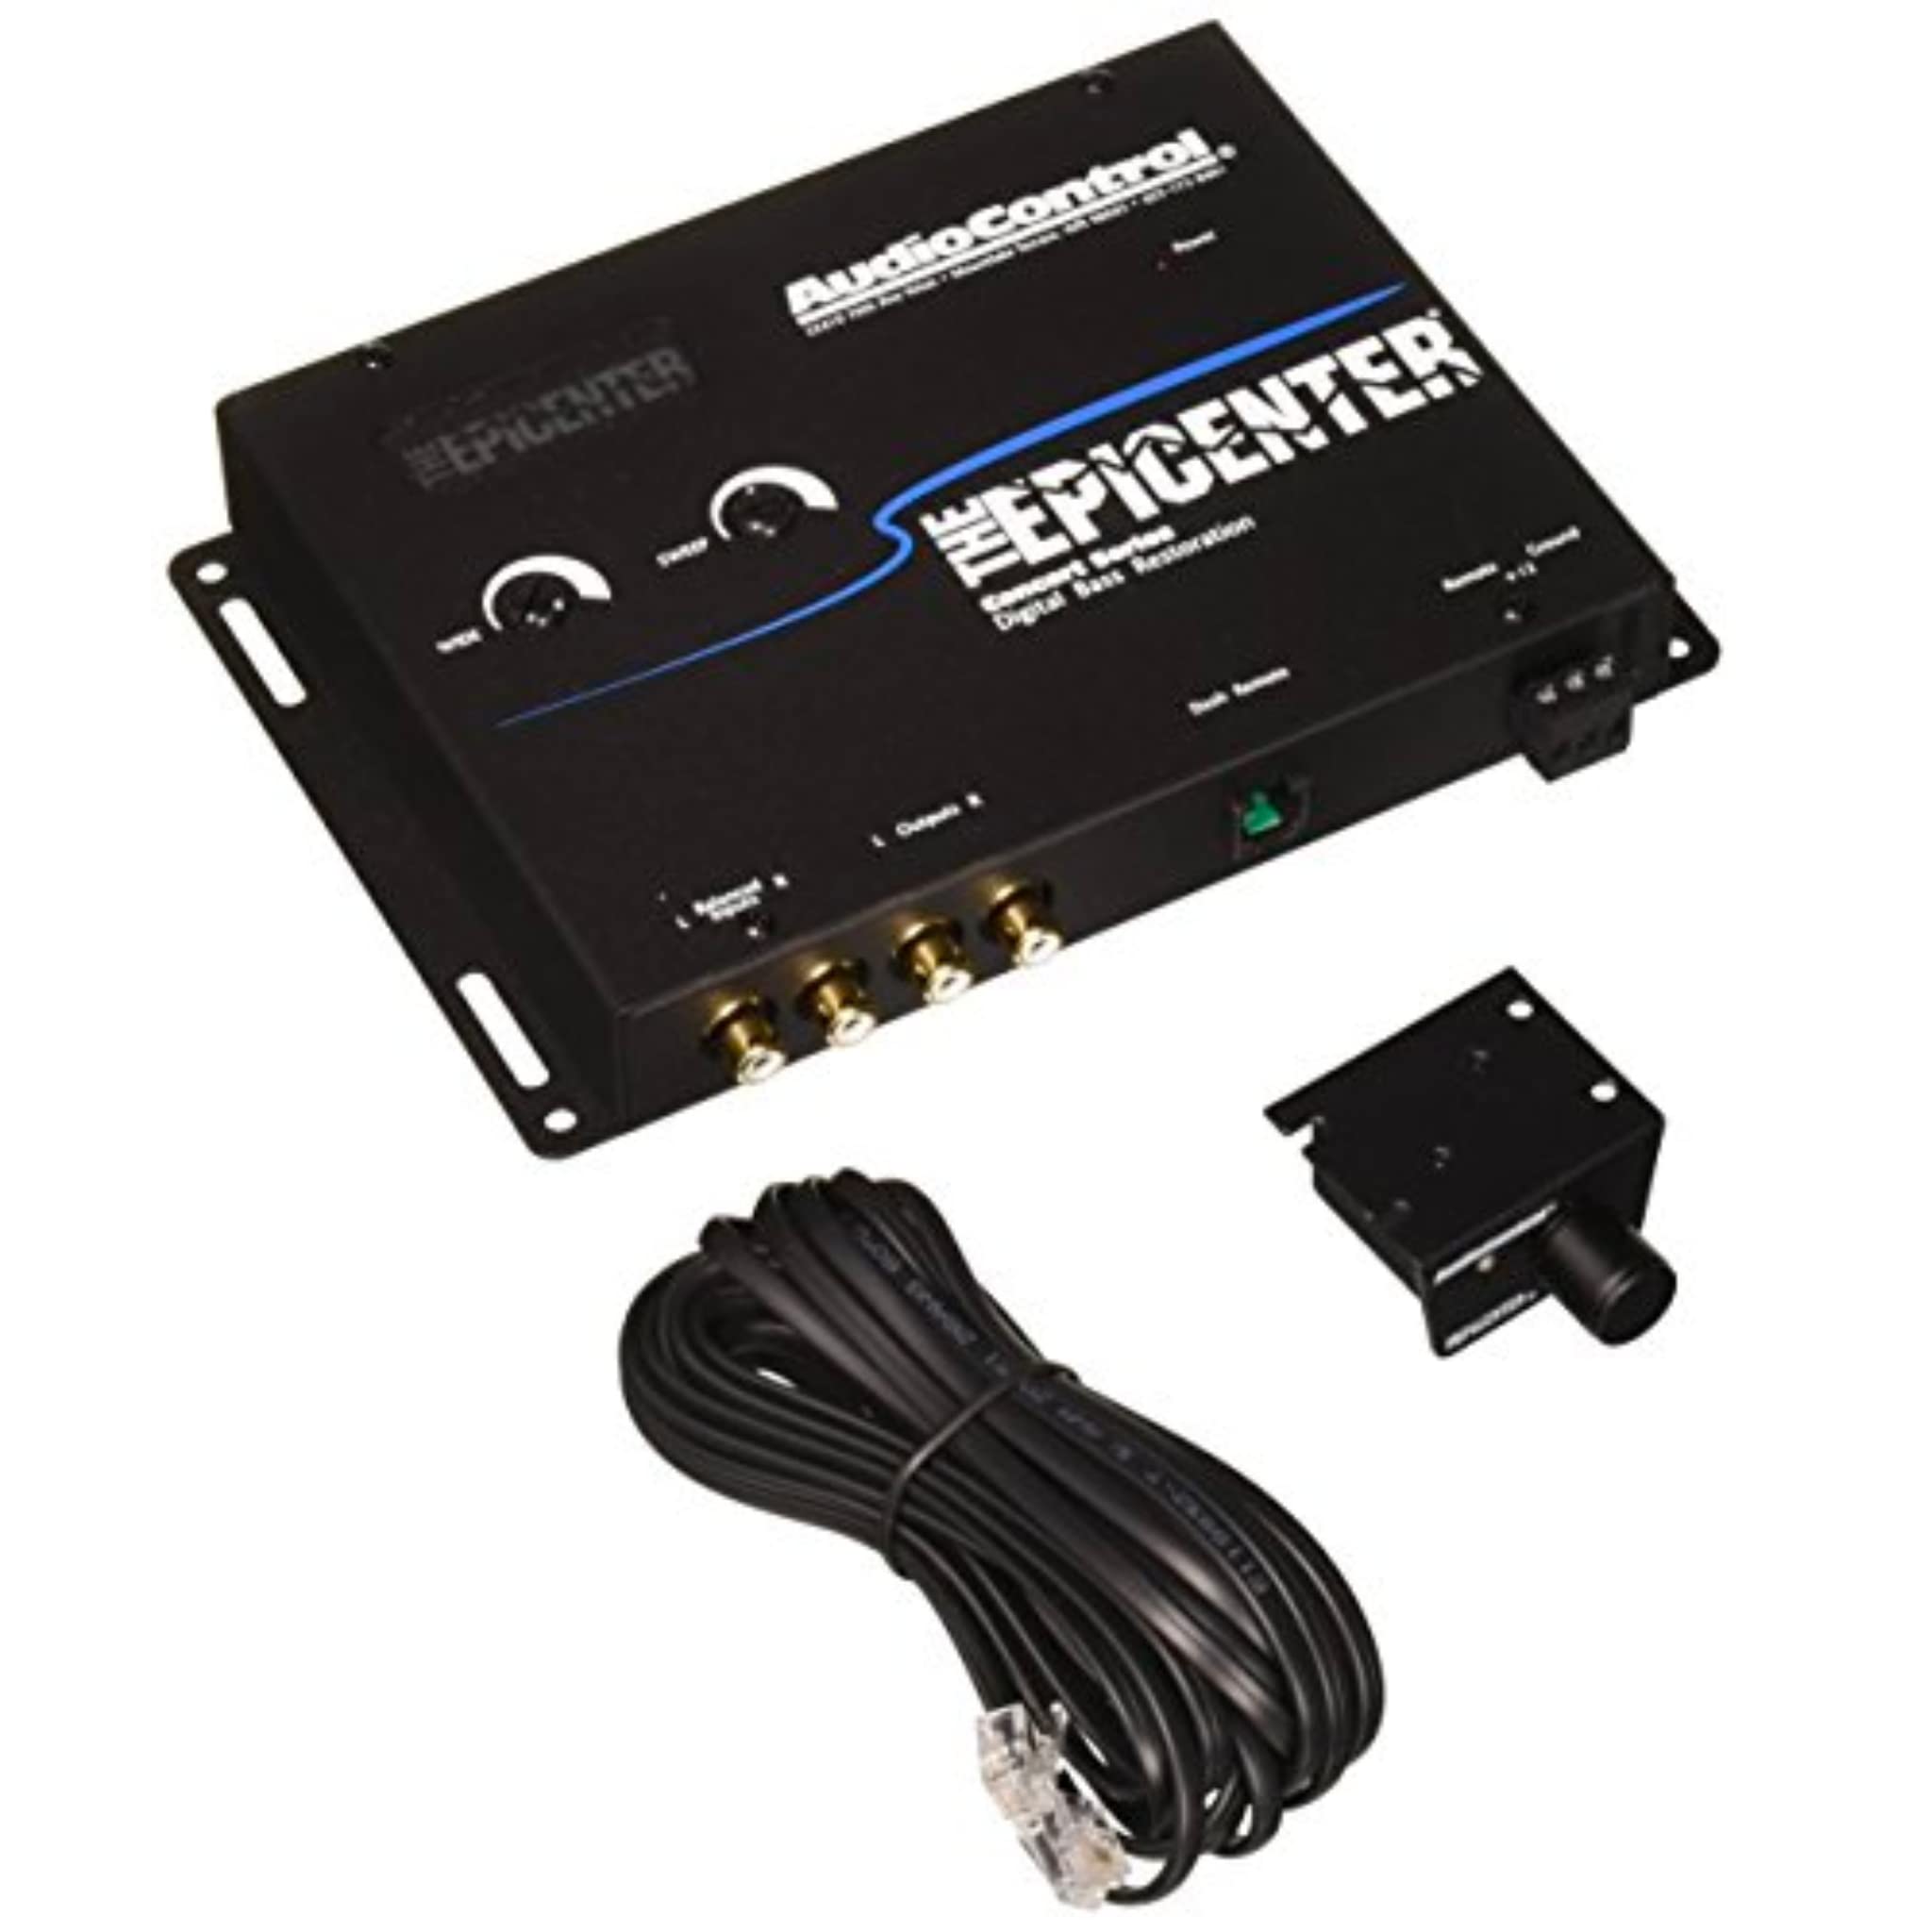 AudioControl Epicenter Digital Bass Control Processor, Car Audio Enhancer with Wired Remote Control (Black)